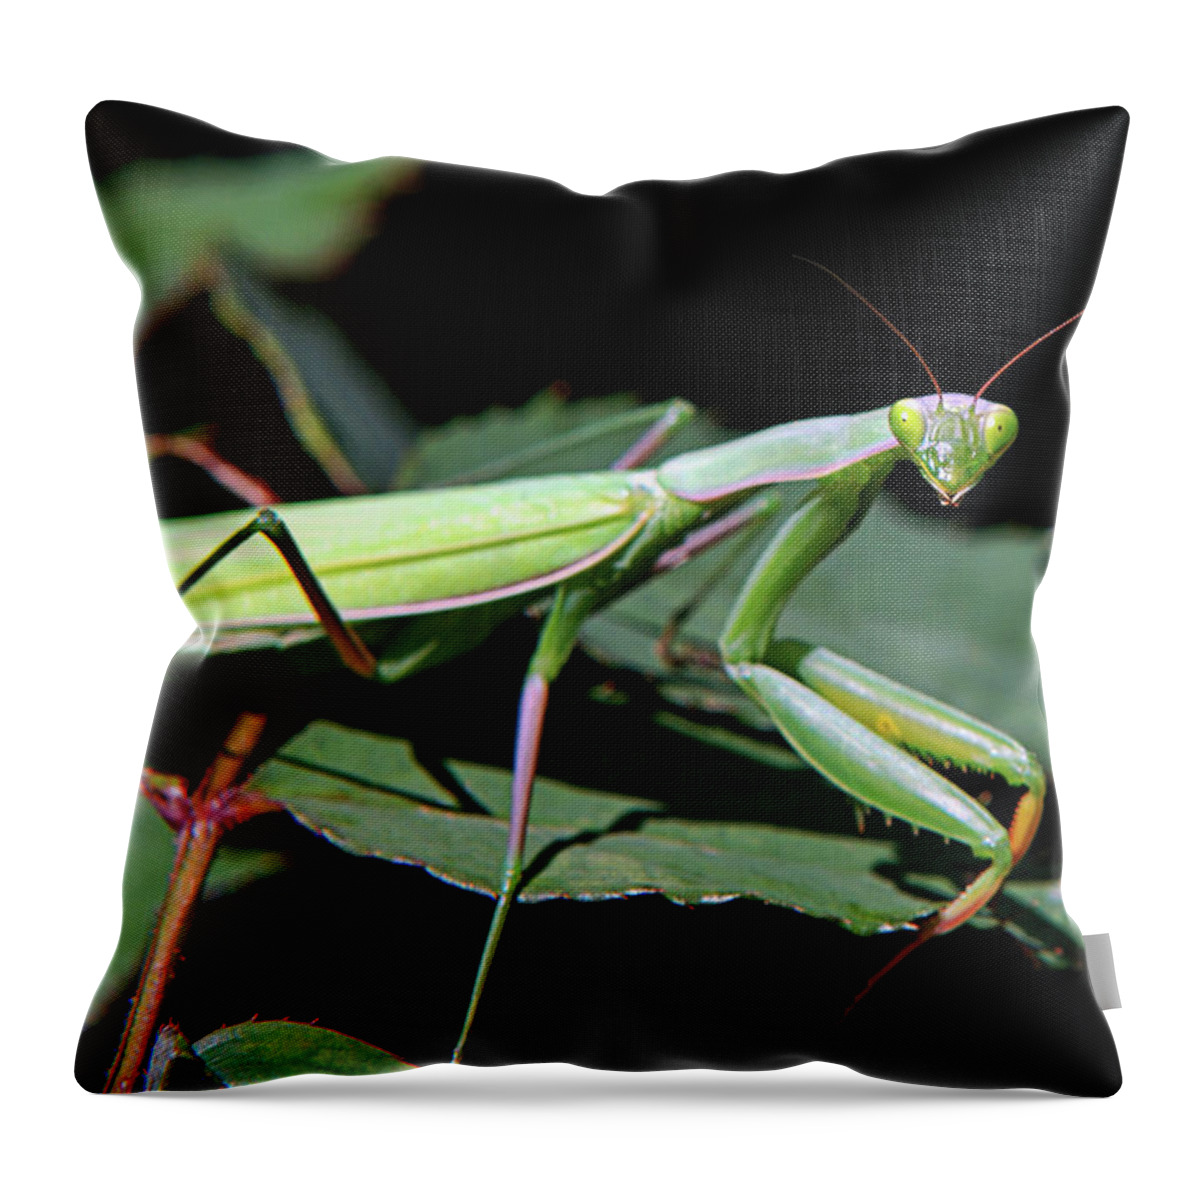 Praying Mantis Throw Pillow featuring the photograph Praying Mantis by Christina Rollo